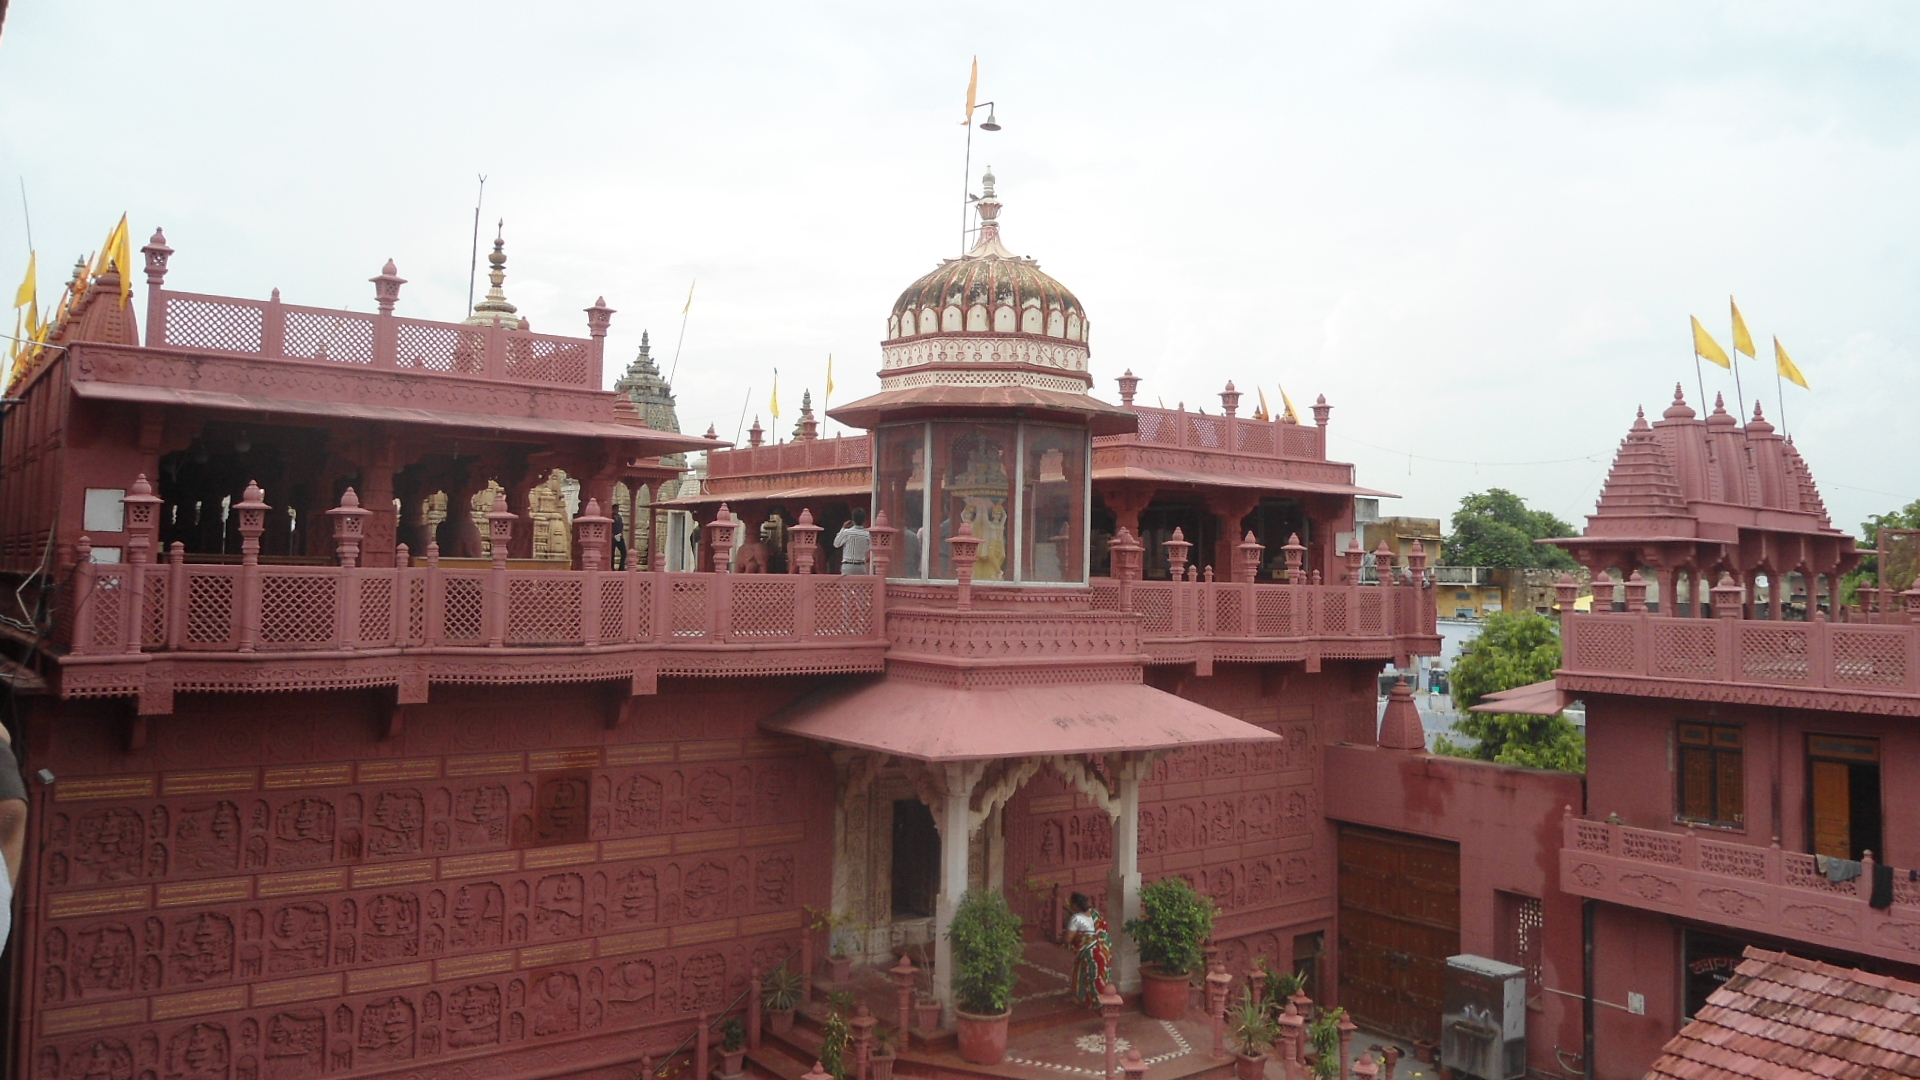 Sangheji jain temple,sanganer,jaipur